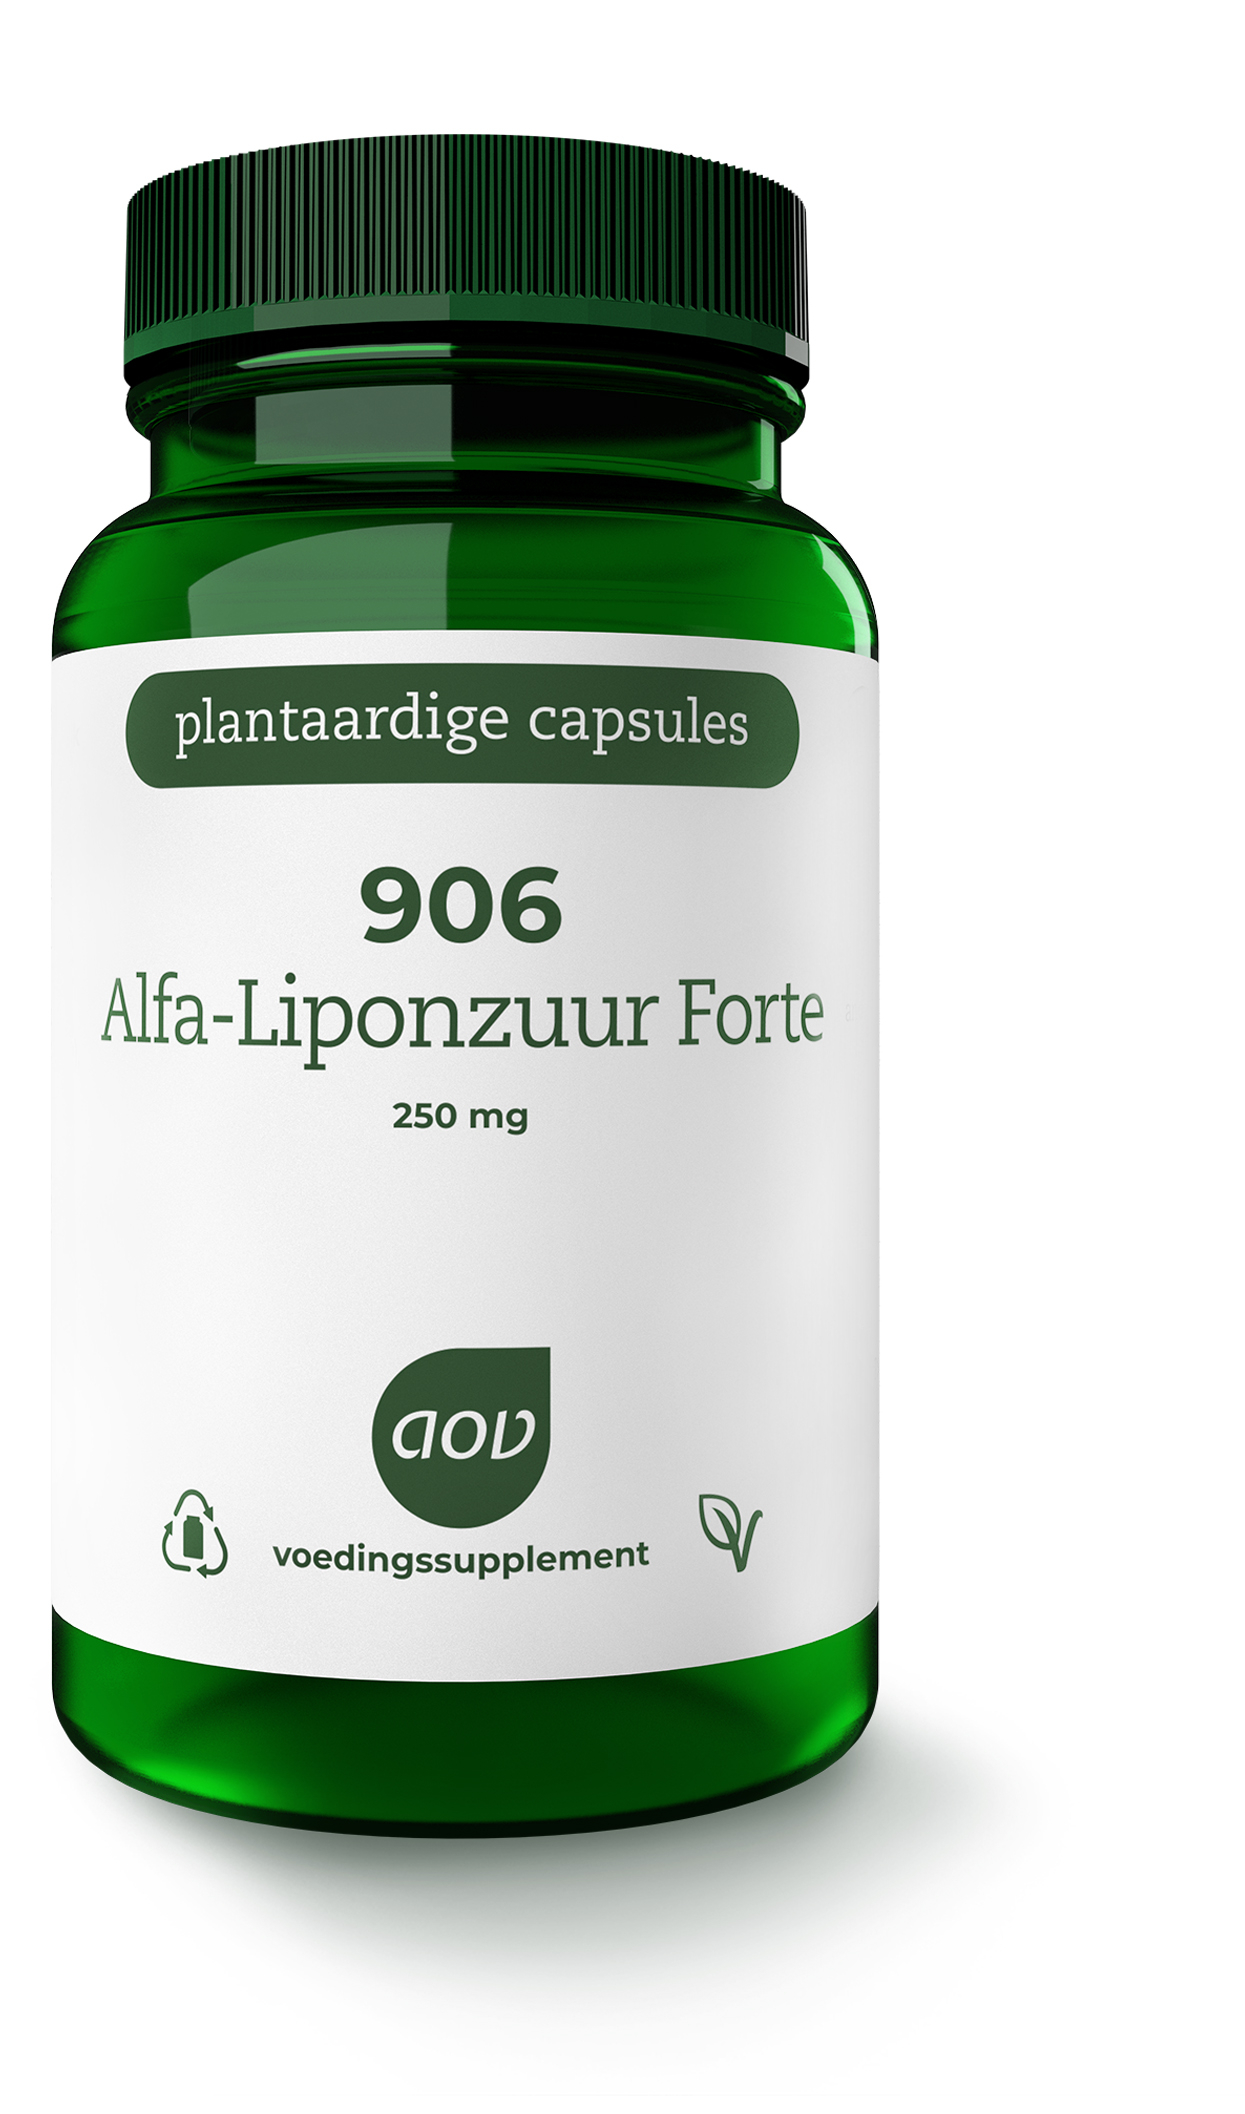 Alfa-liponzuur Forte (250 mg) - 60 VegCaps - 906